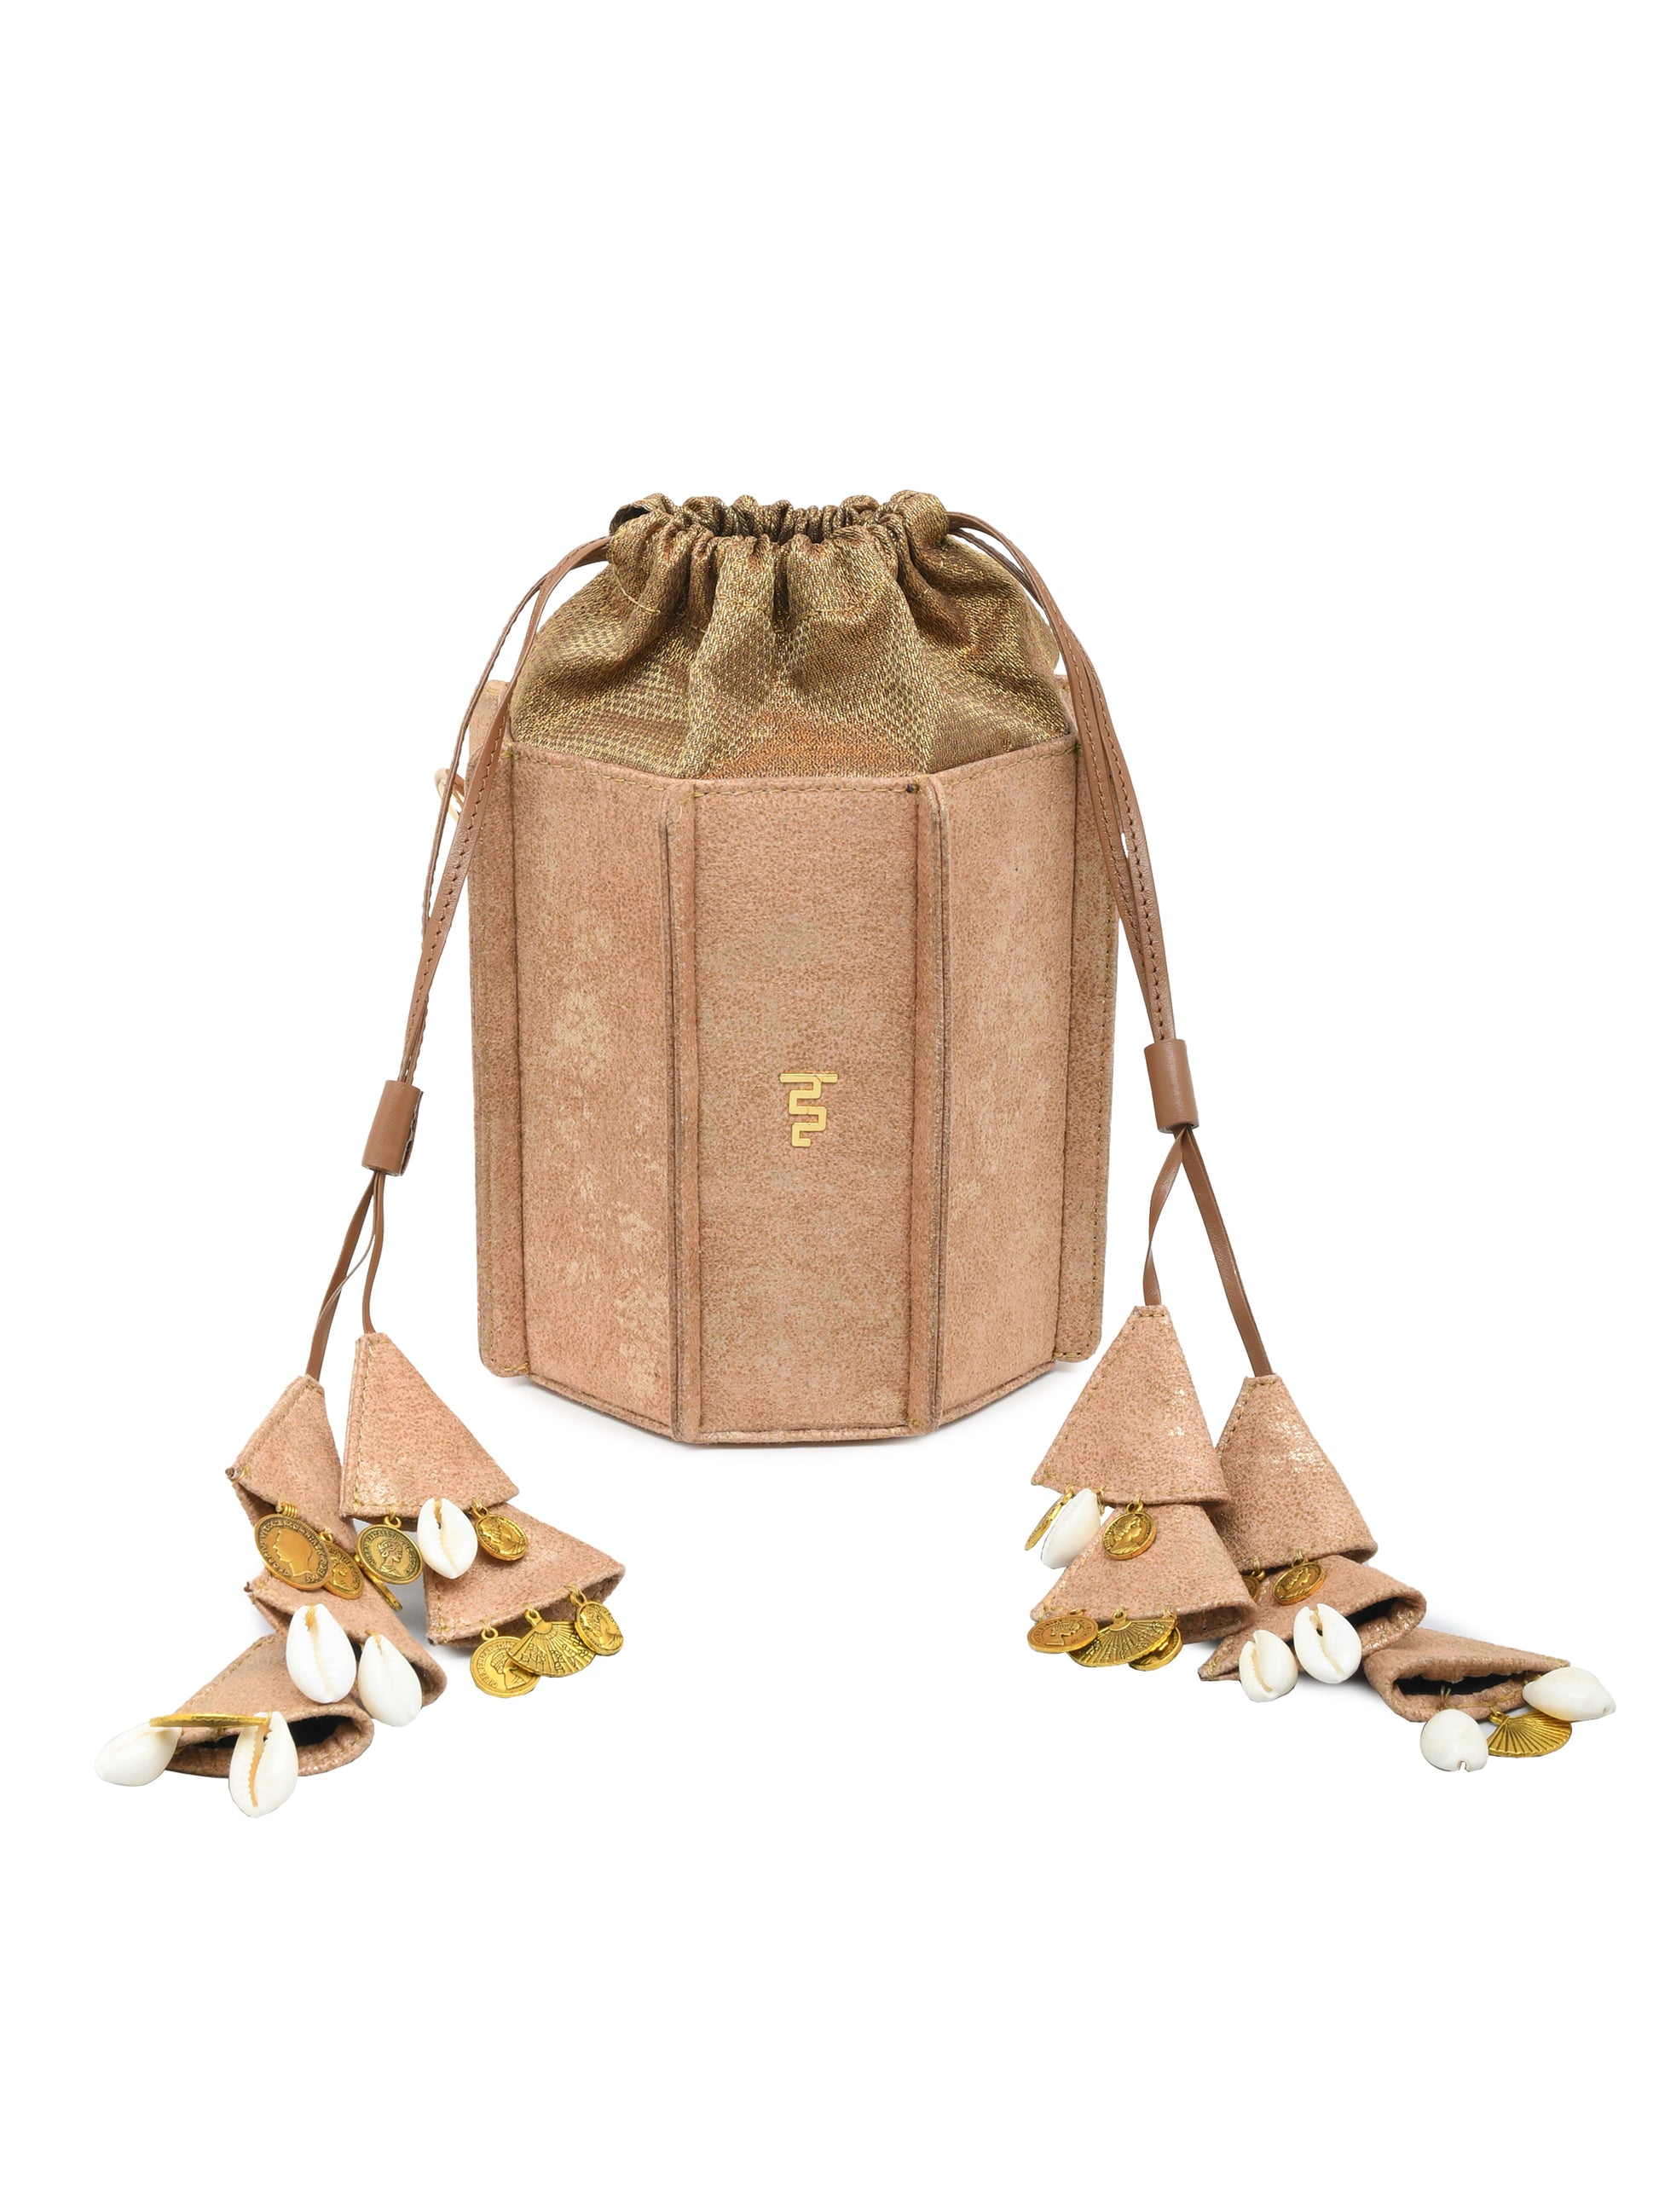 IMMRI I Leather Bags, Belts and Accessories (@studioimmri